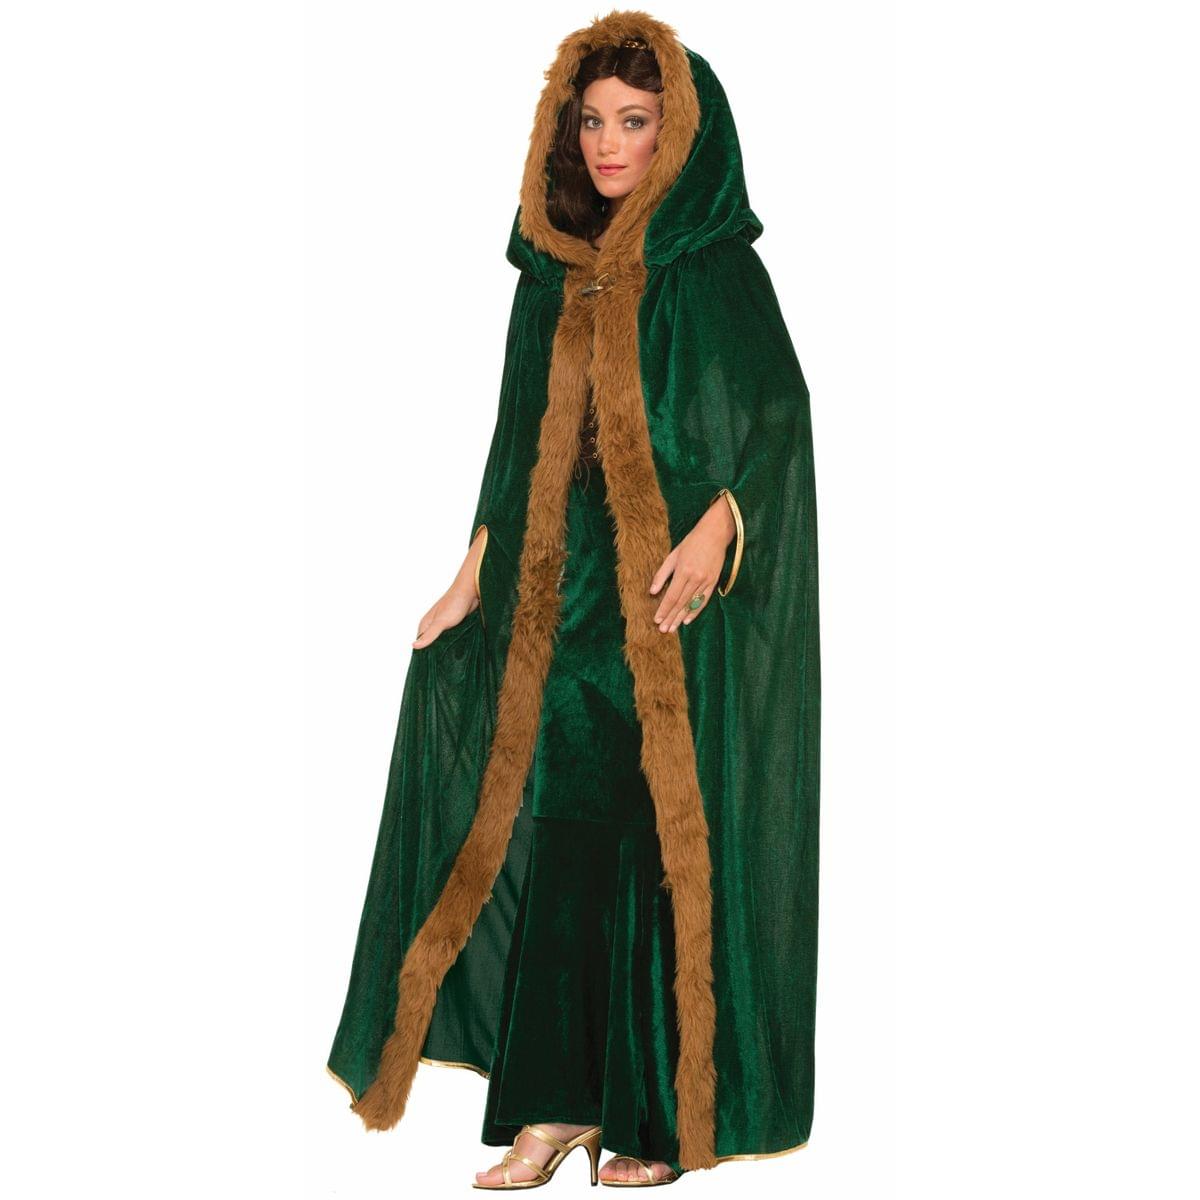 Medieval Fantasy Green W/Faux Fur Trim Adult Costume Cape